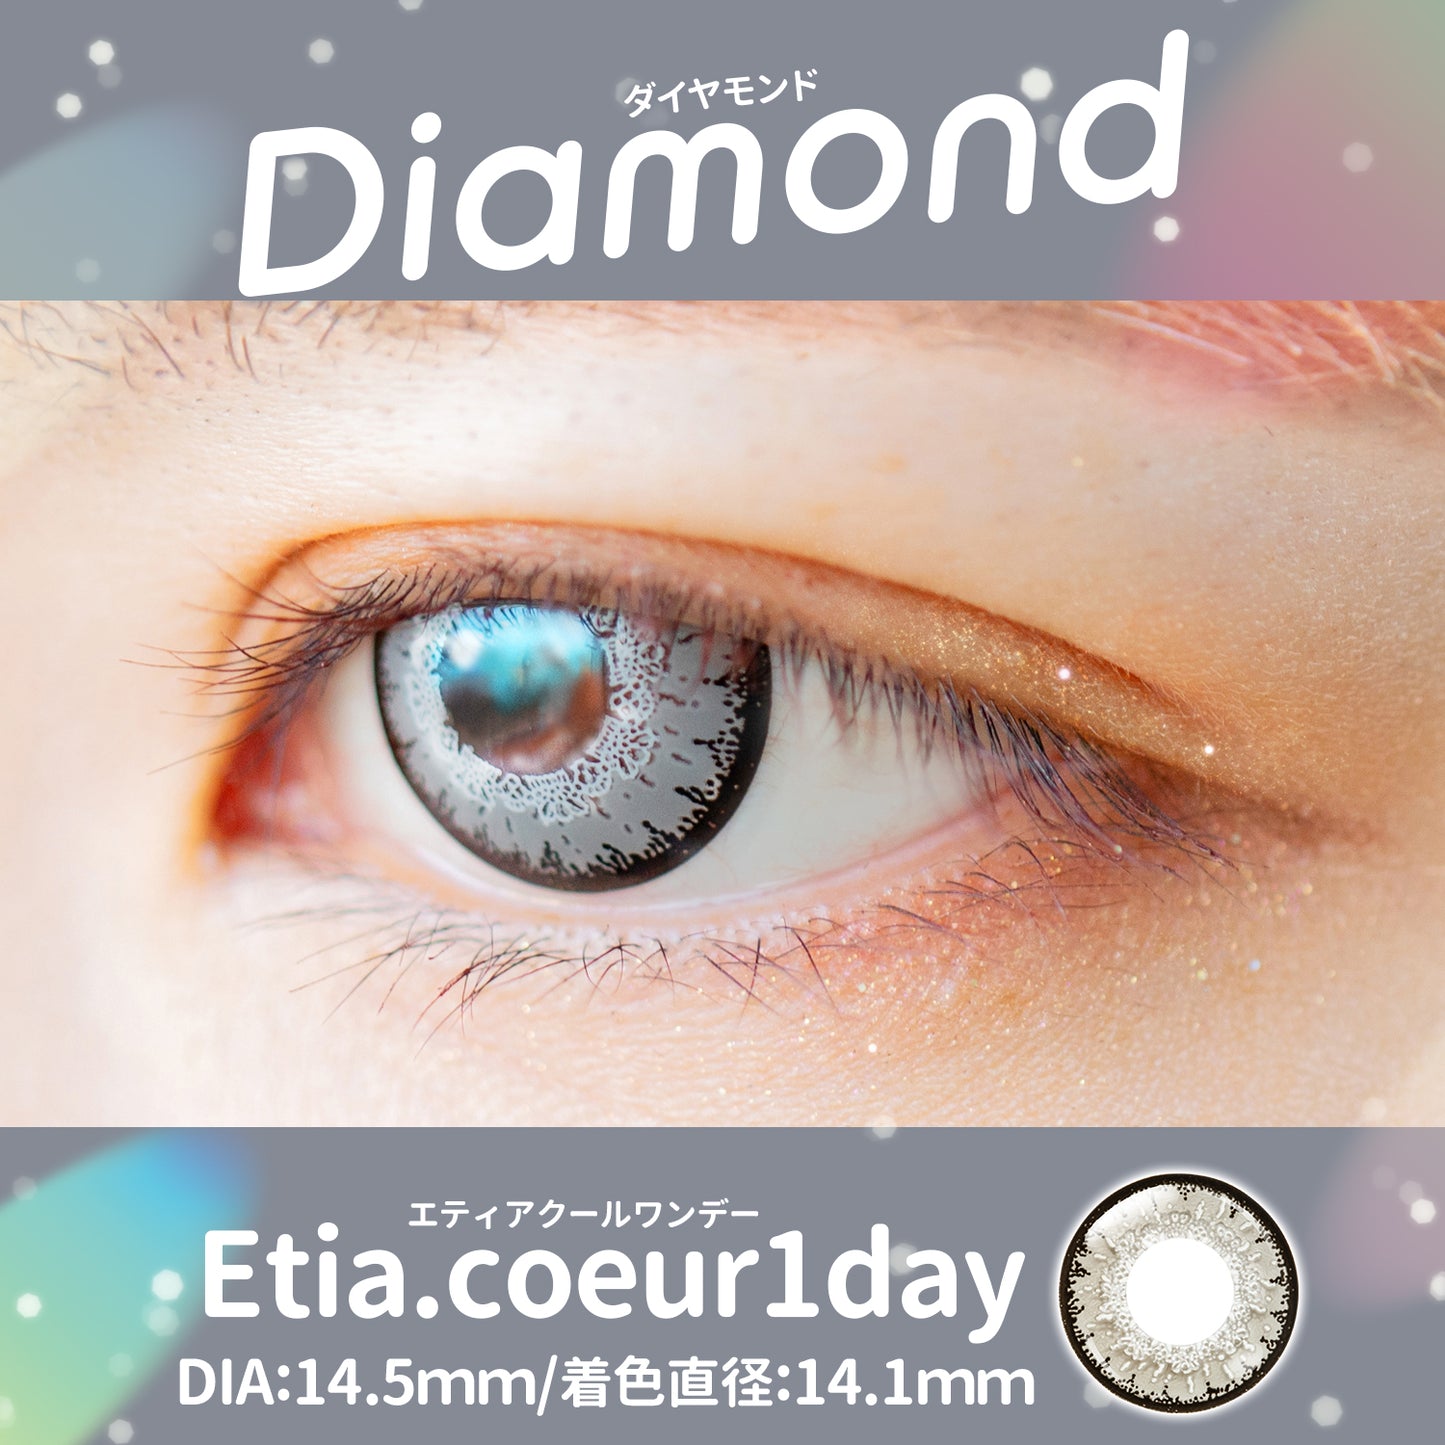 PUDDING Etia Coeur Diamond | 1 Day, 6 Pcs